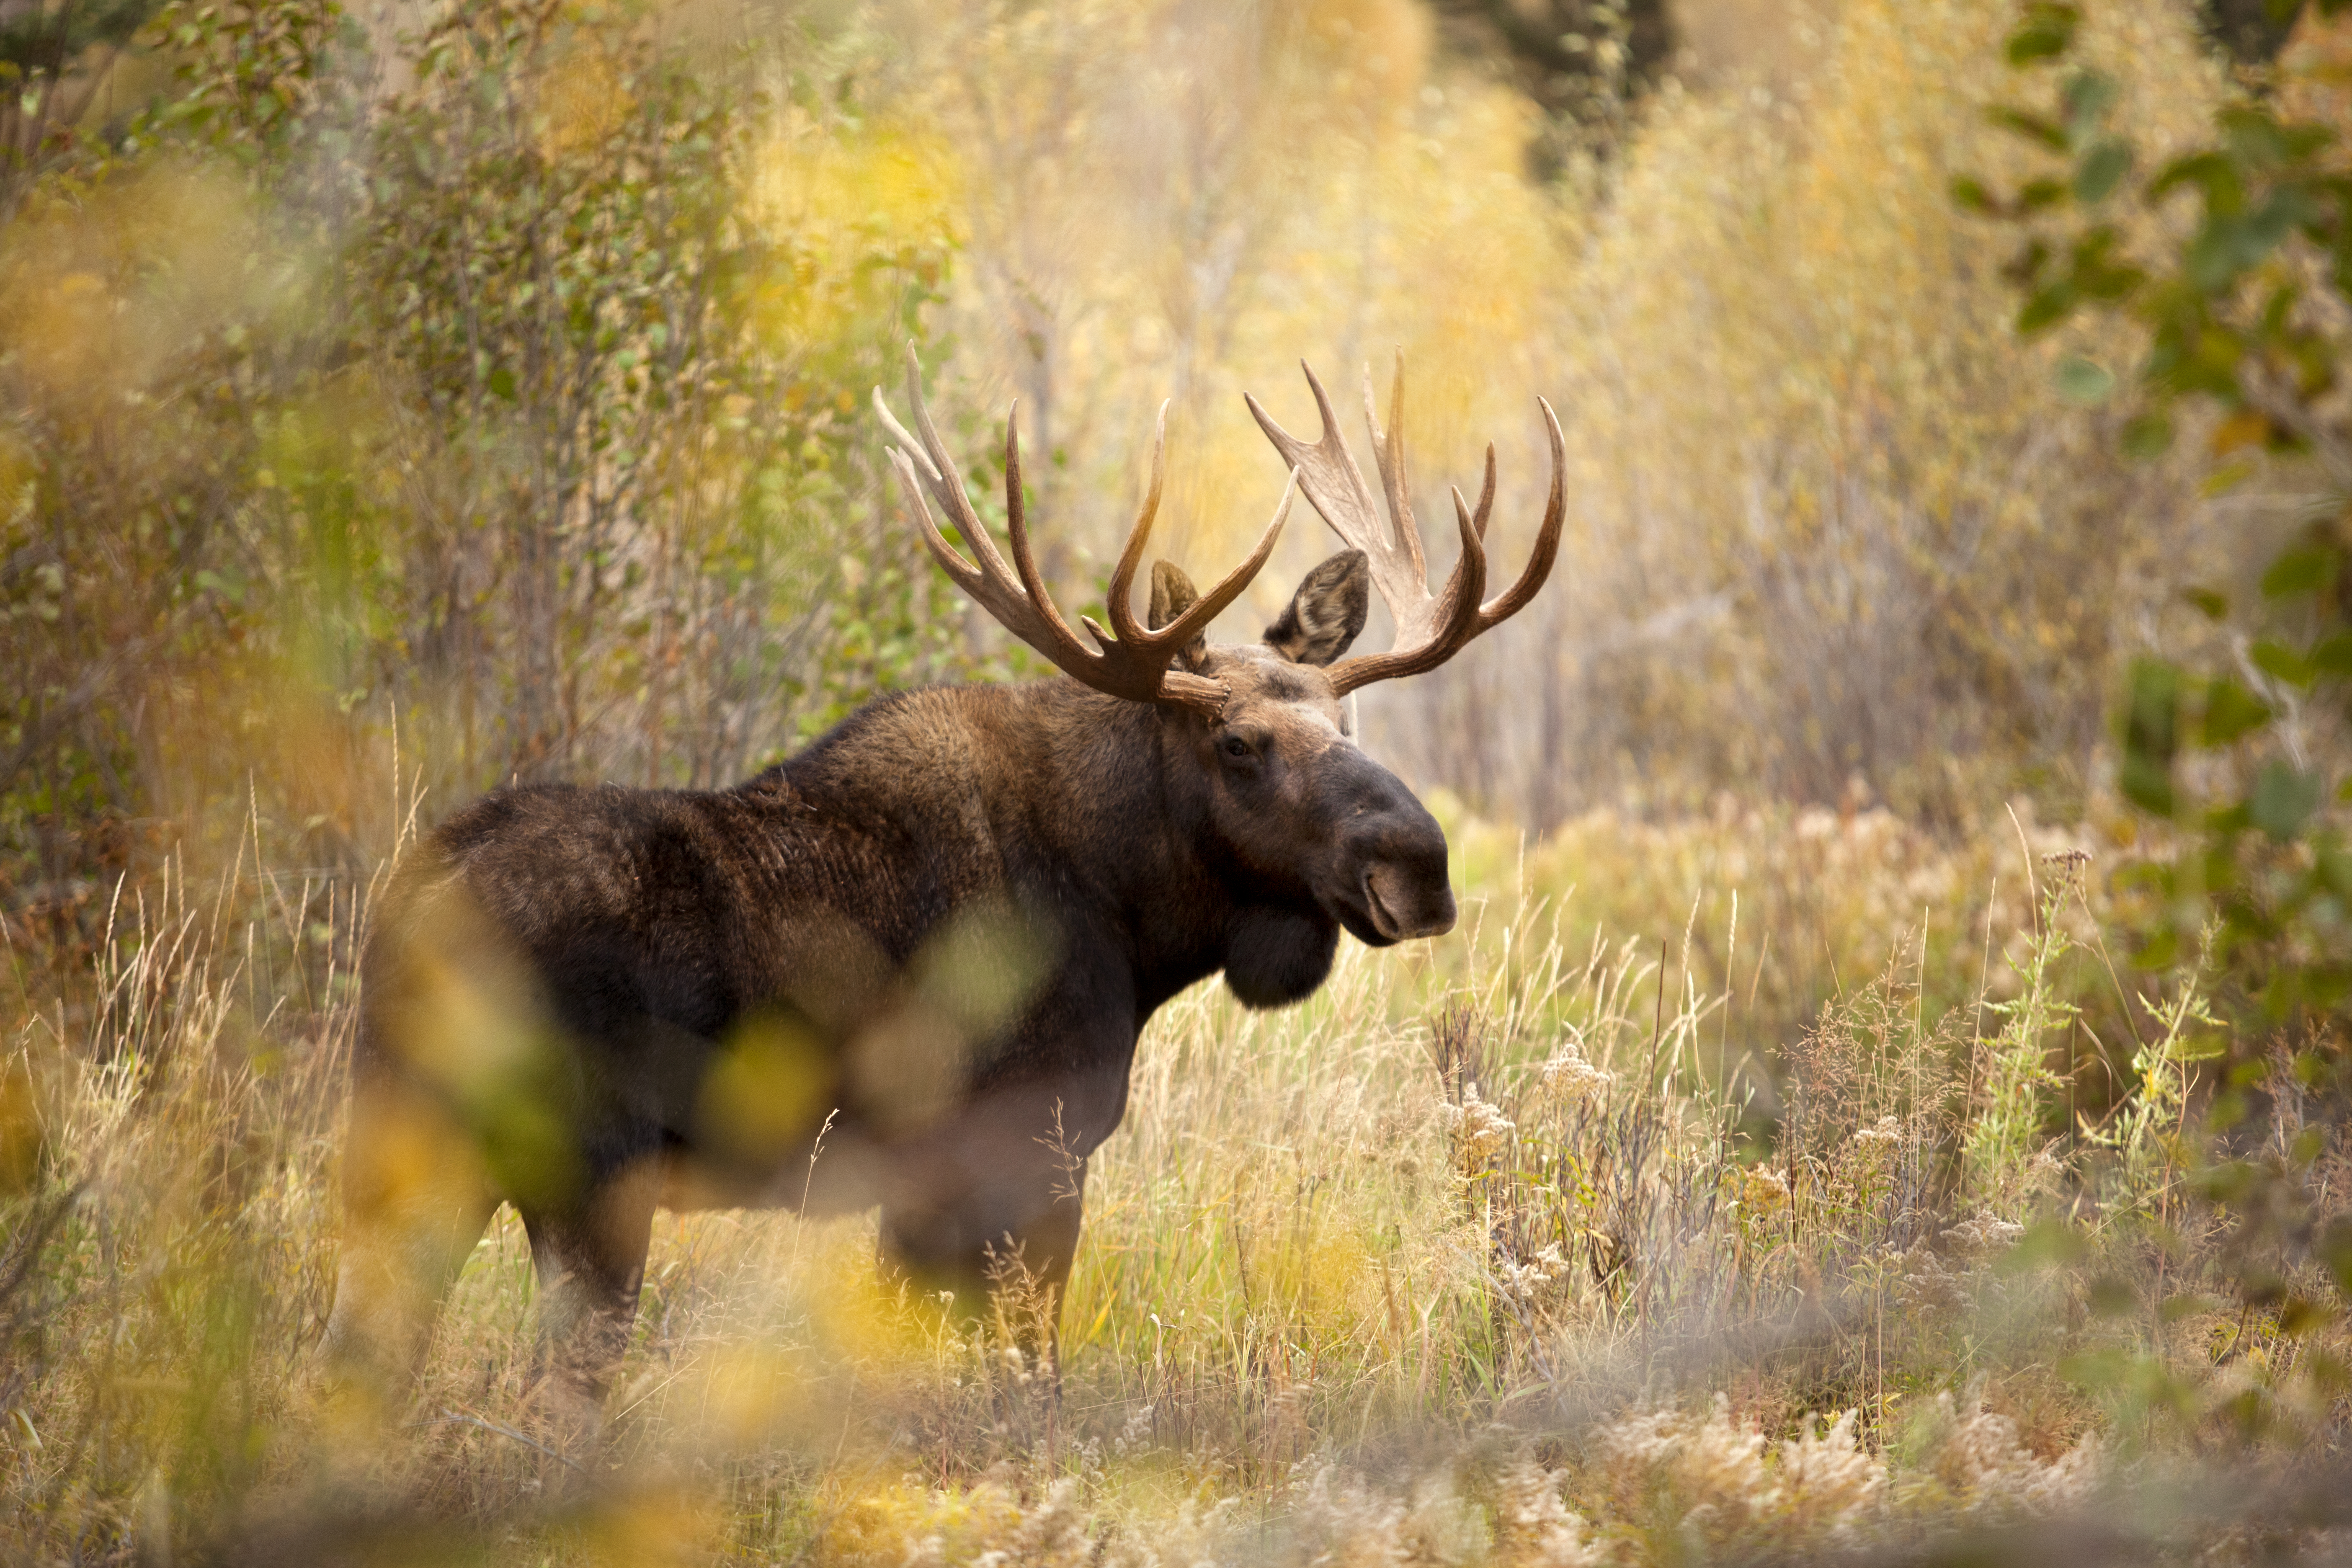 Moose On The Loose By Louieschwartzberg